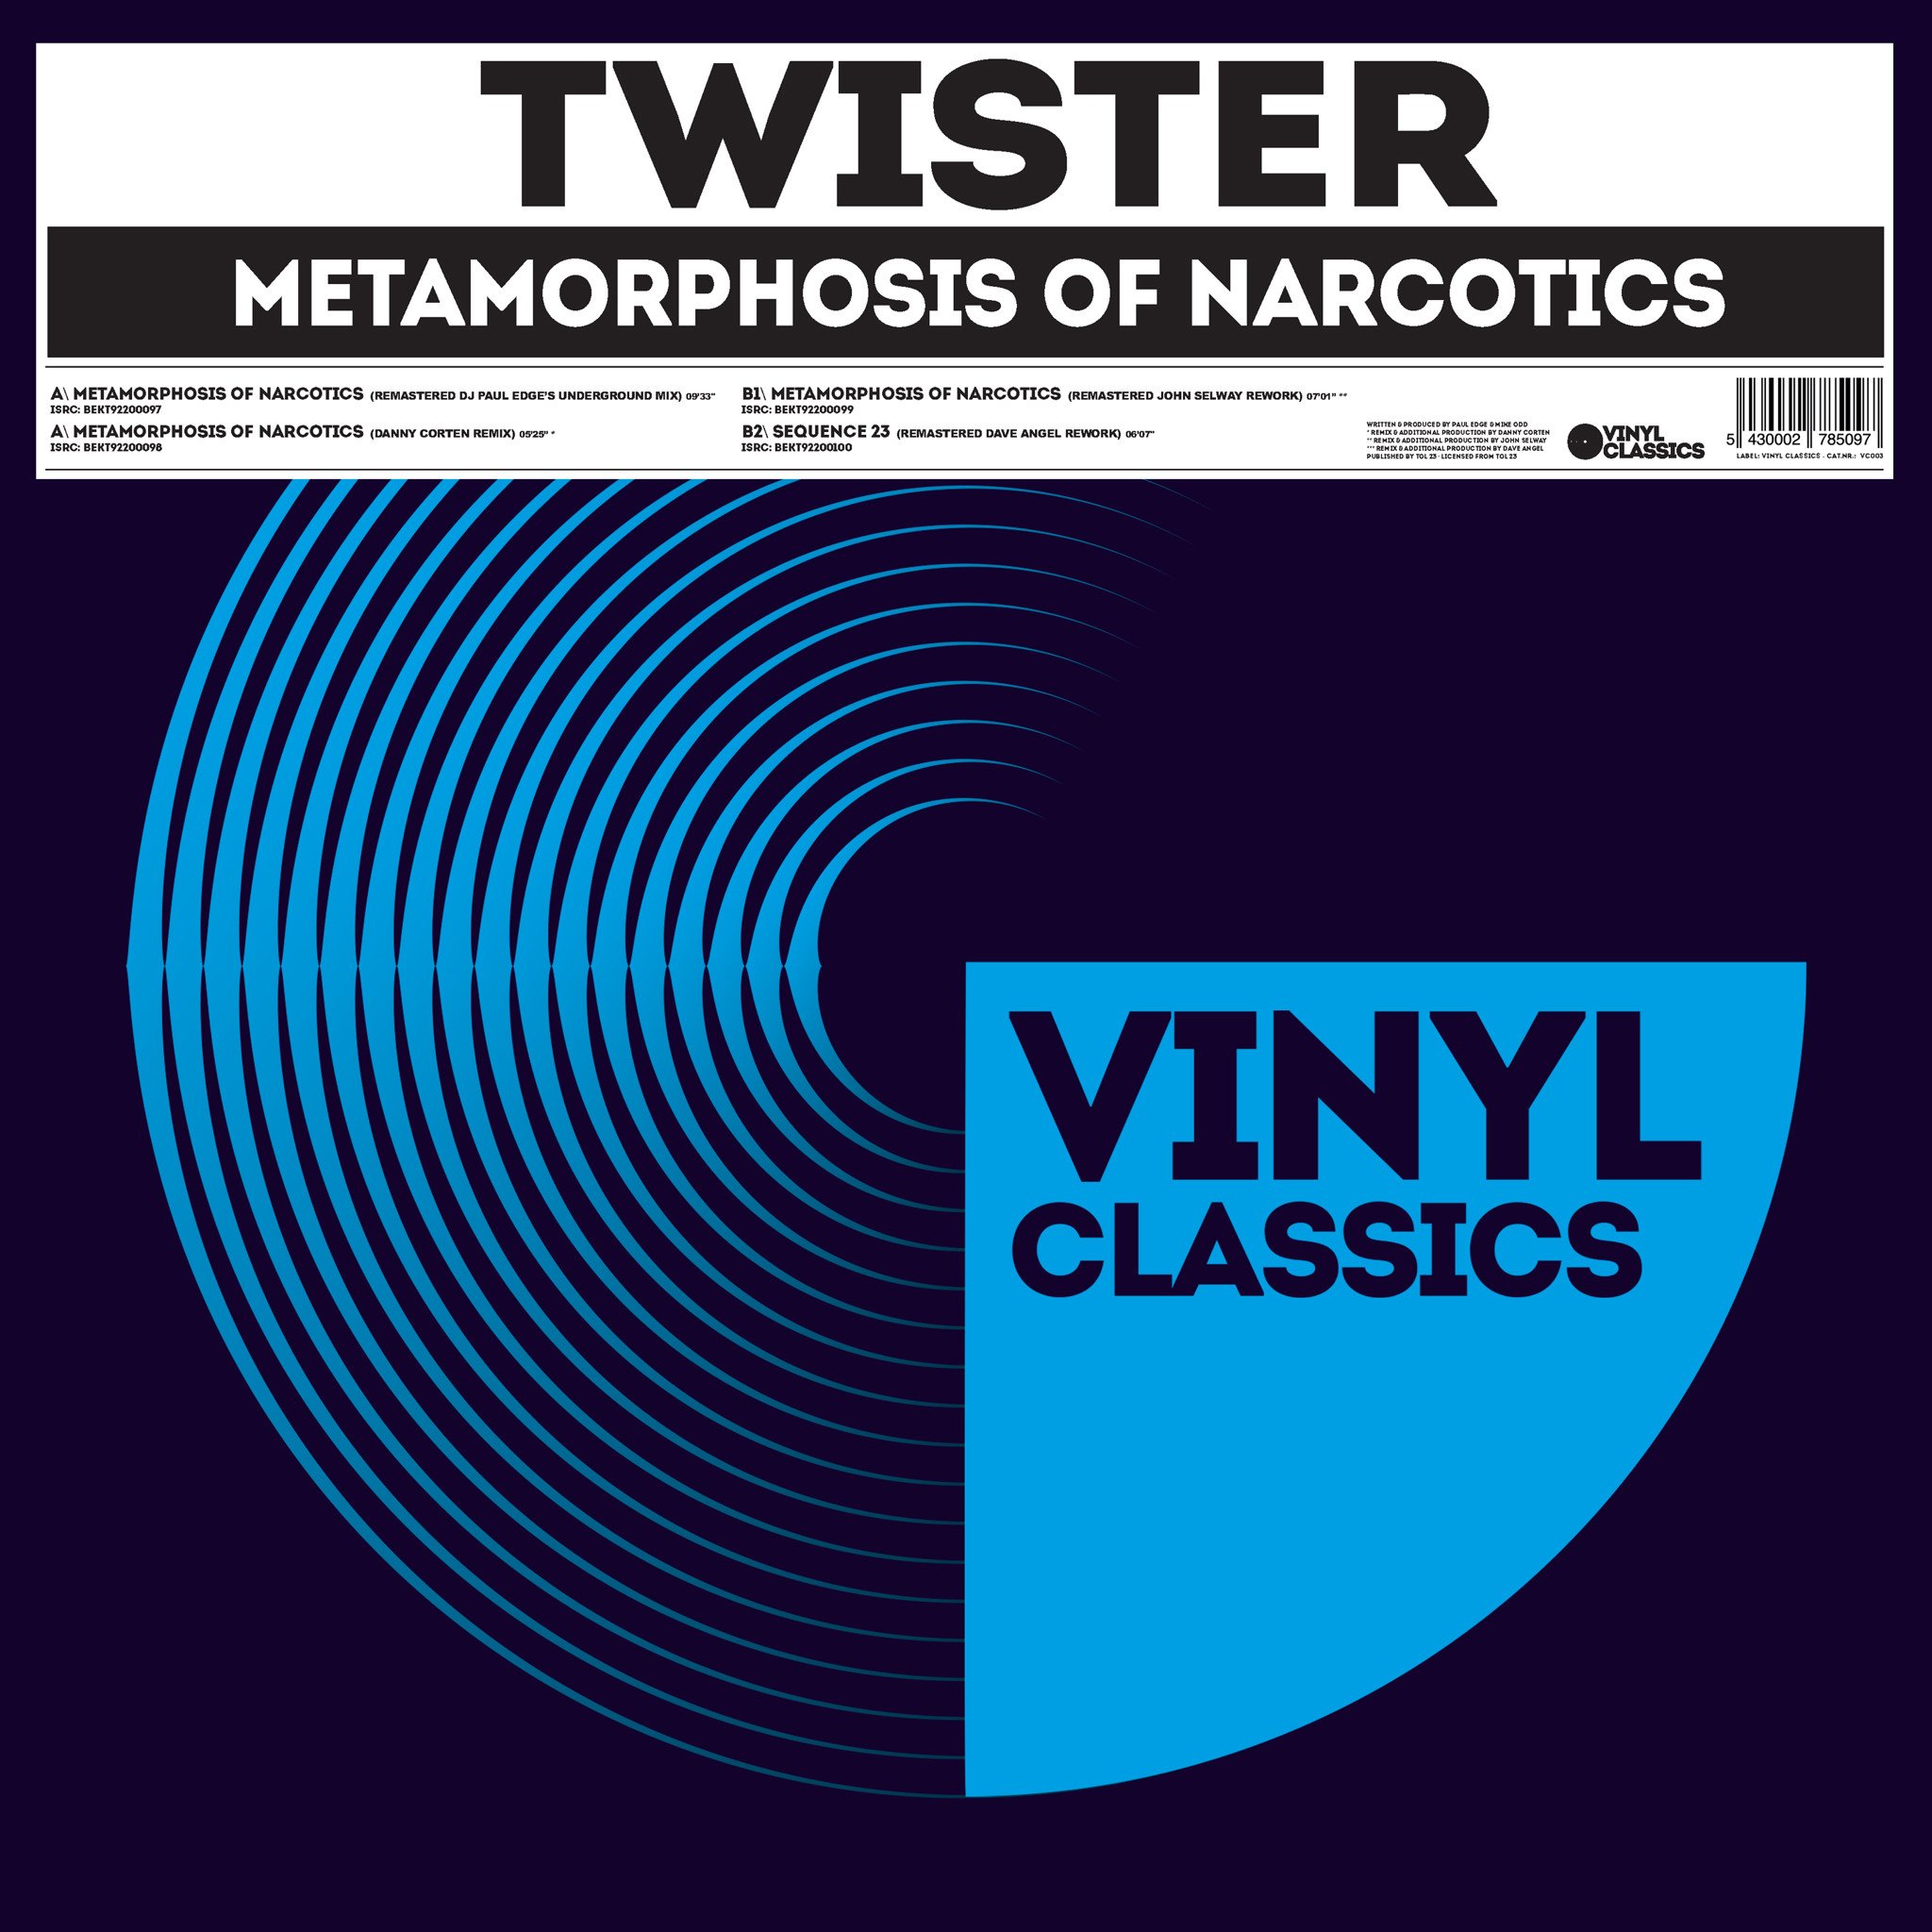 Twister - Metamorphosis Of Narcotics (Vinyl Classics) (MV)